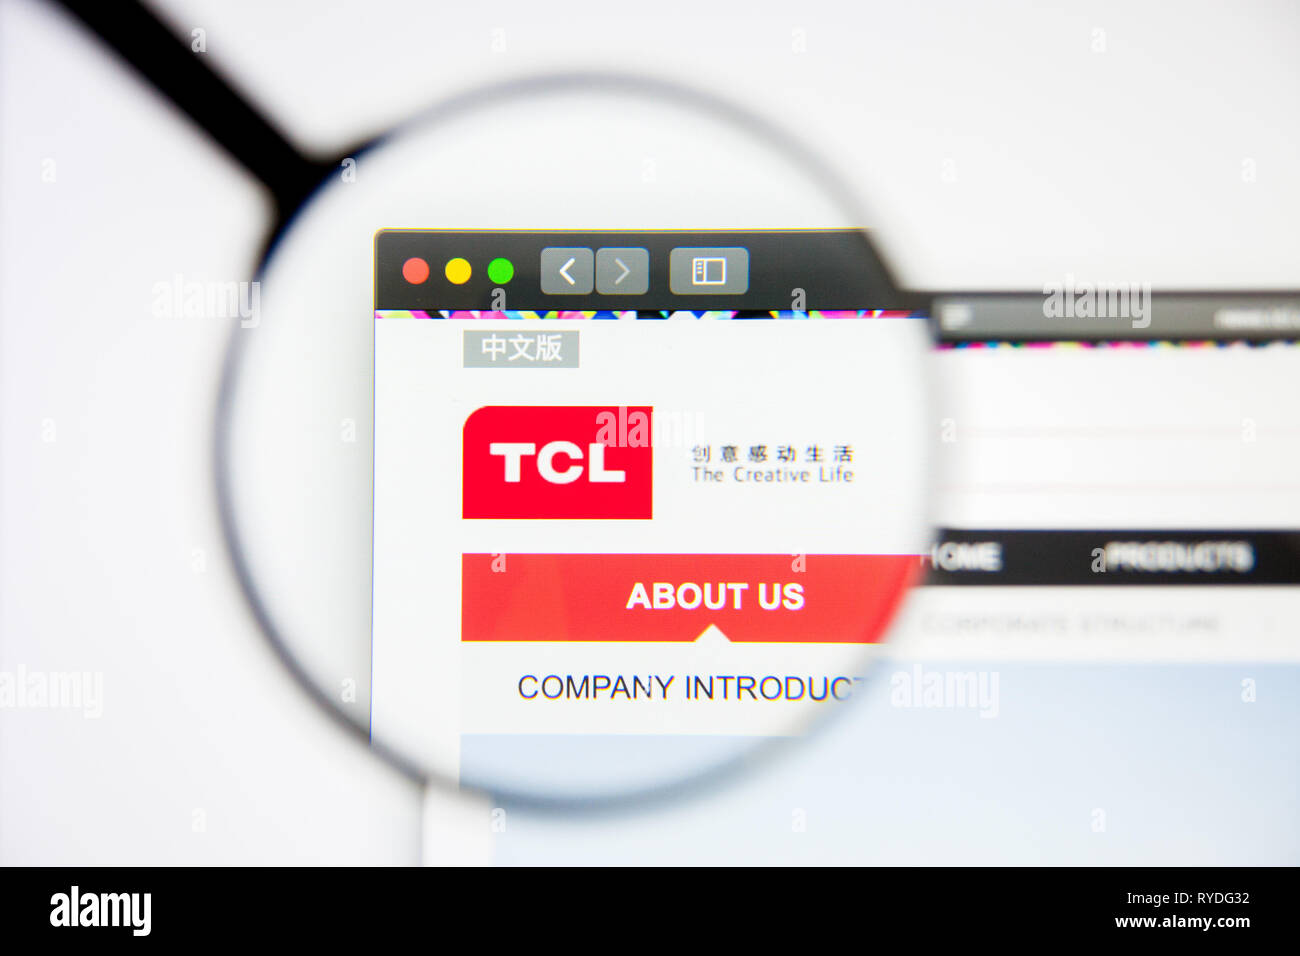 Los Angeles, Kalifornien, USA - 5. März 2019: TCL Corp Homepage. TCL Corp Logo sichtbar auf dem Display, Illustrative Editorial Stockfoto